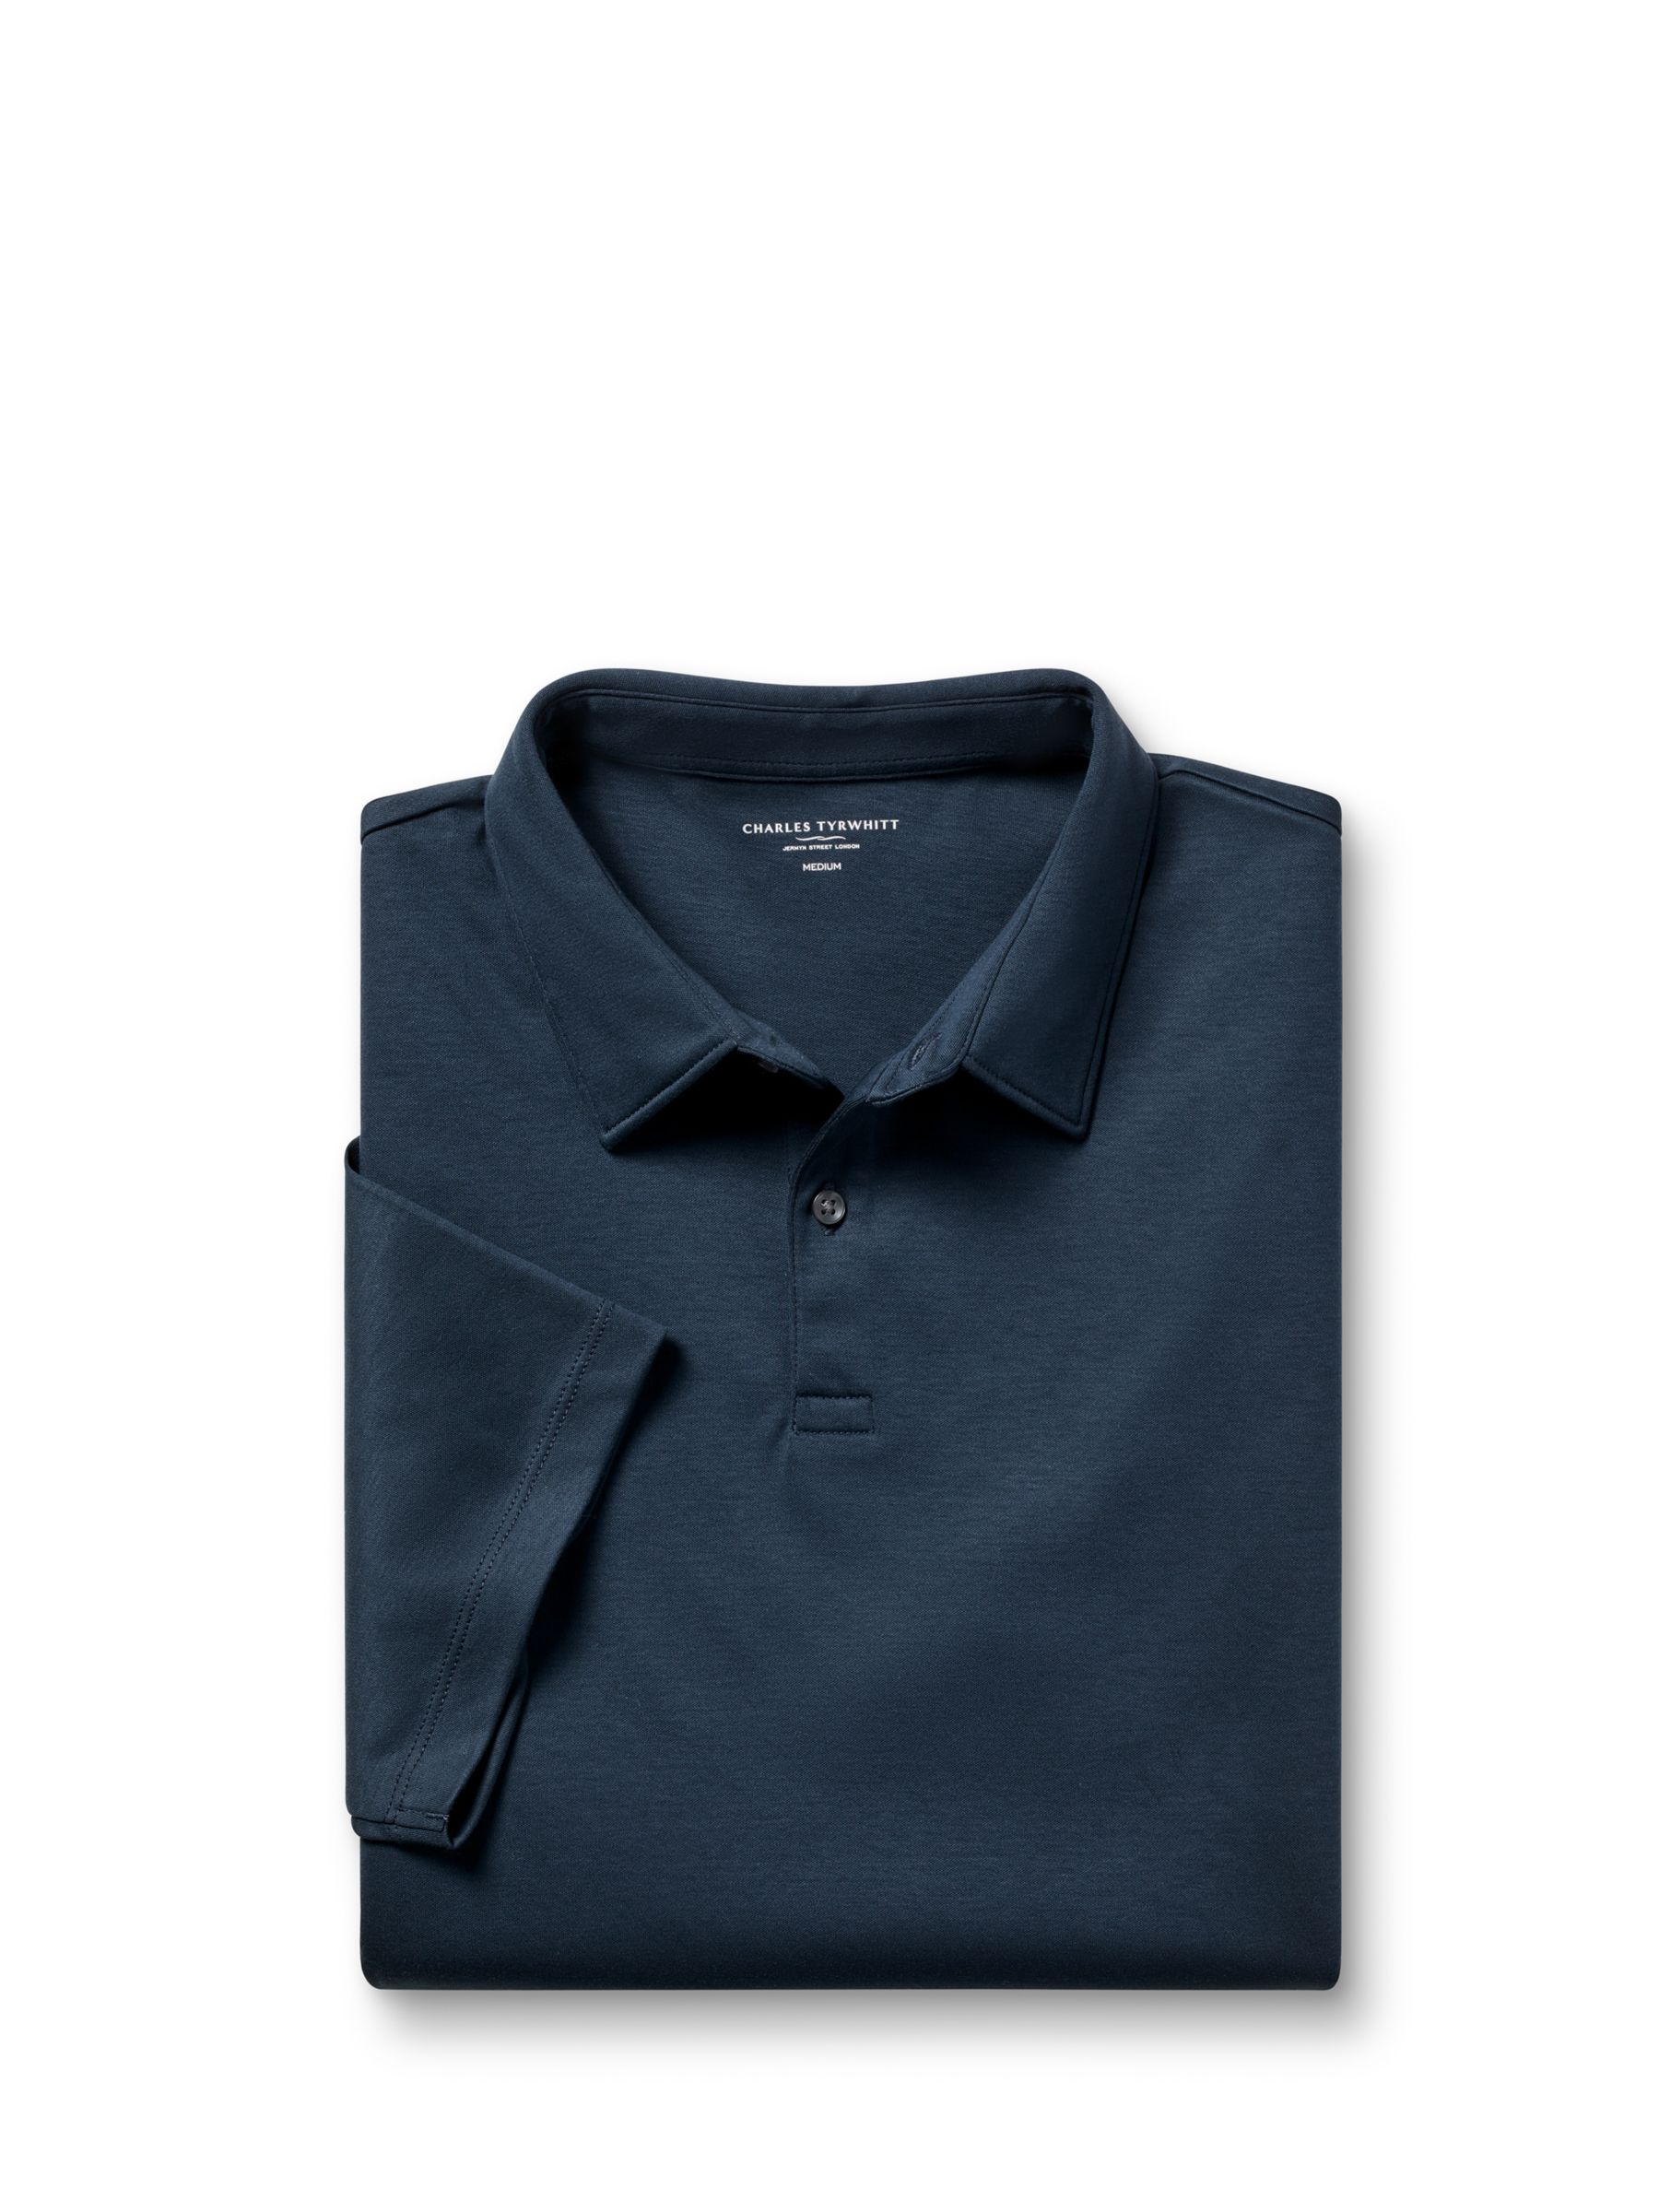 Charles Tyrwhitt Short Sleeve Jersey Polo Shirt, Petrol Blue, S